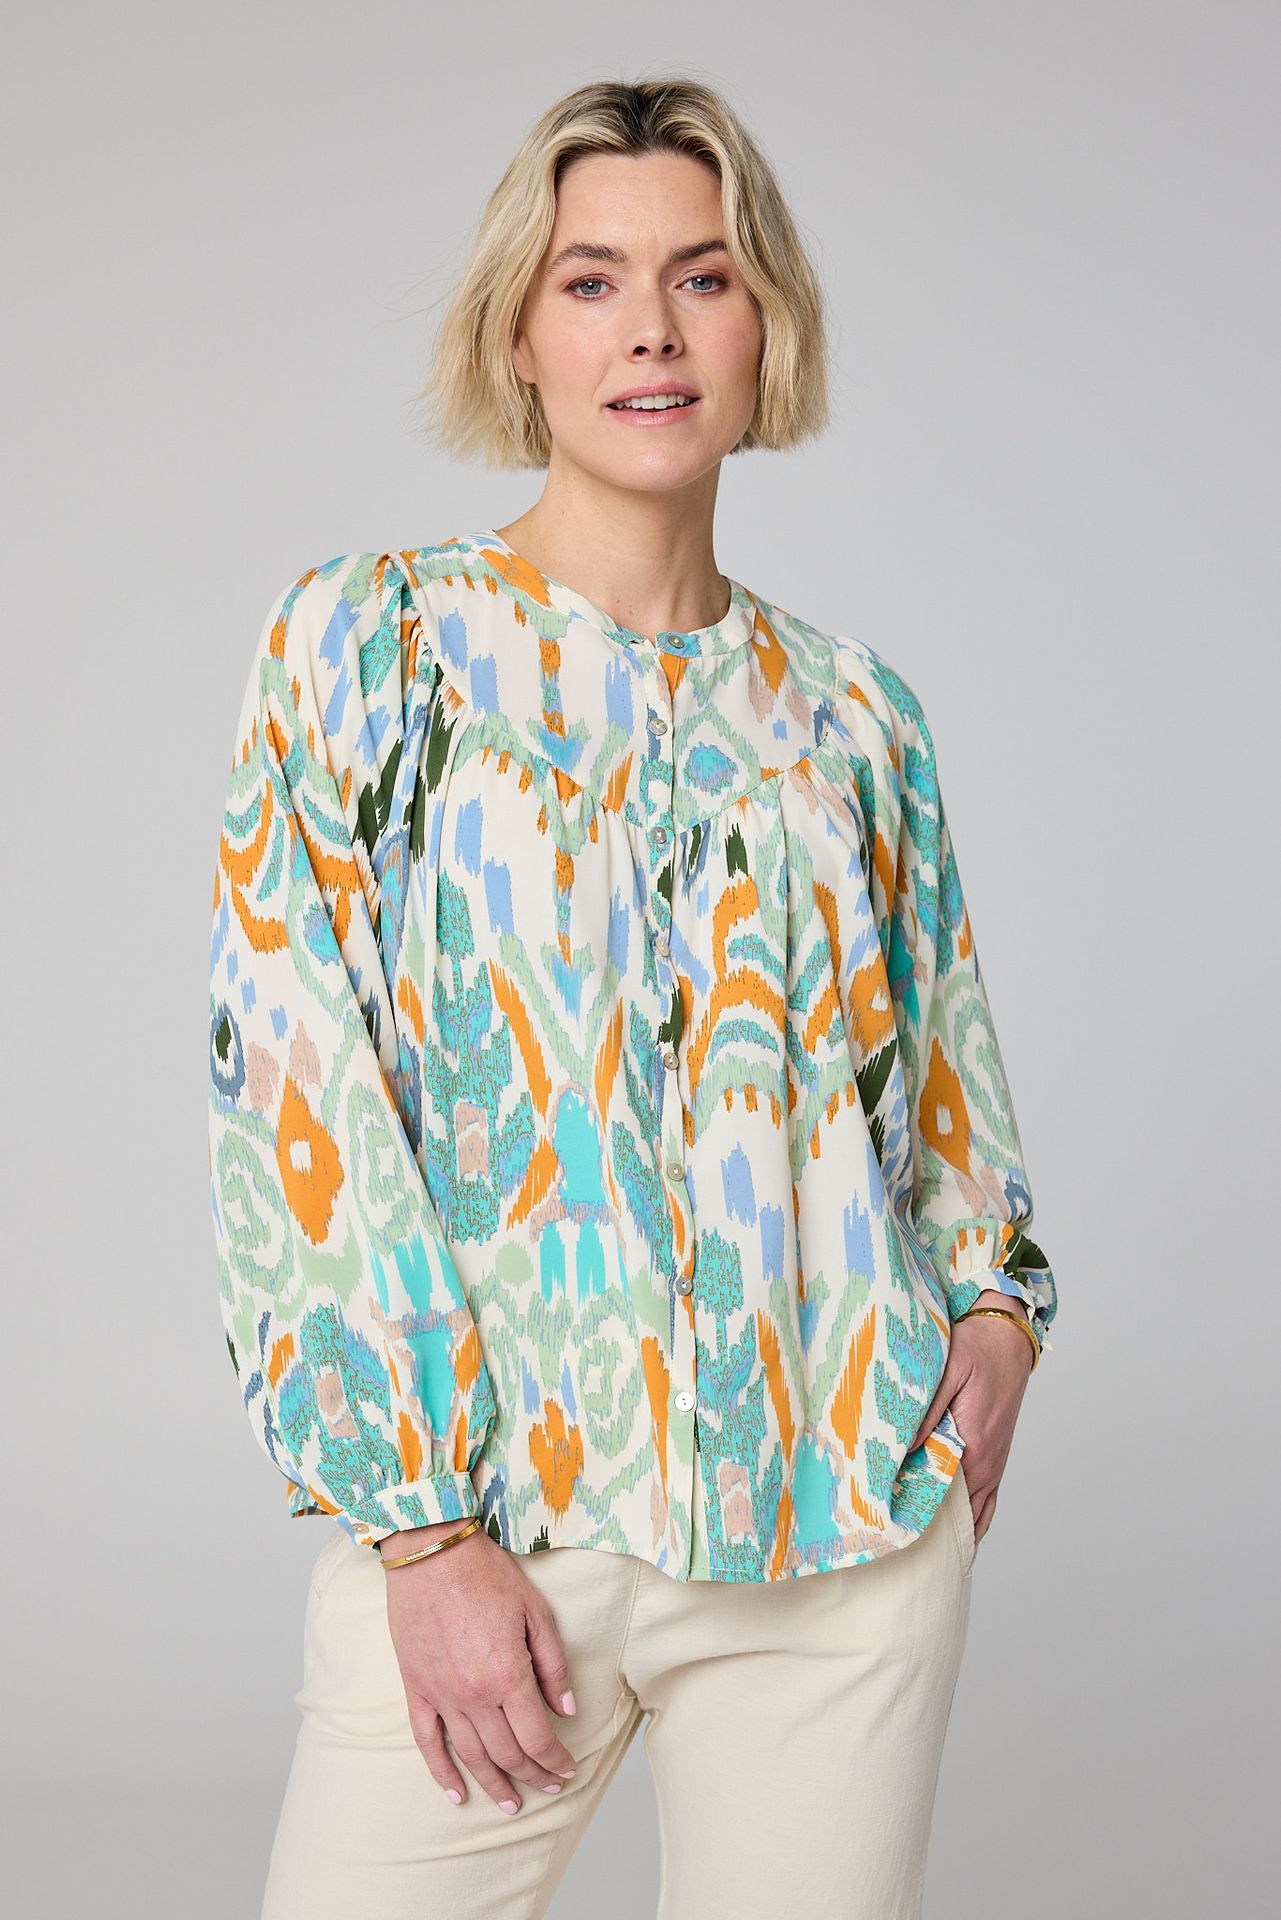  Meerkleurige blouse multicolor 214107-002-48